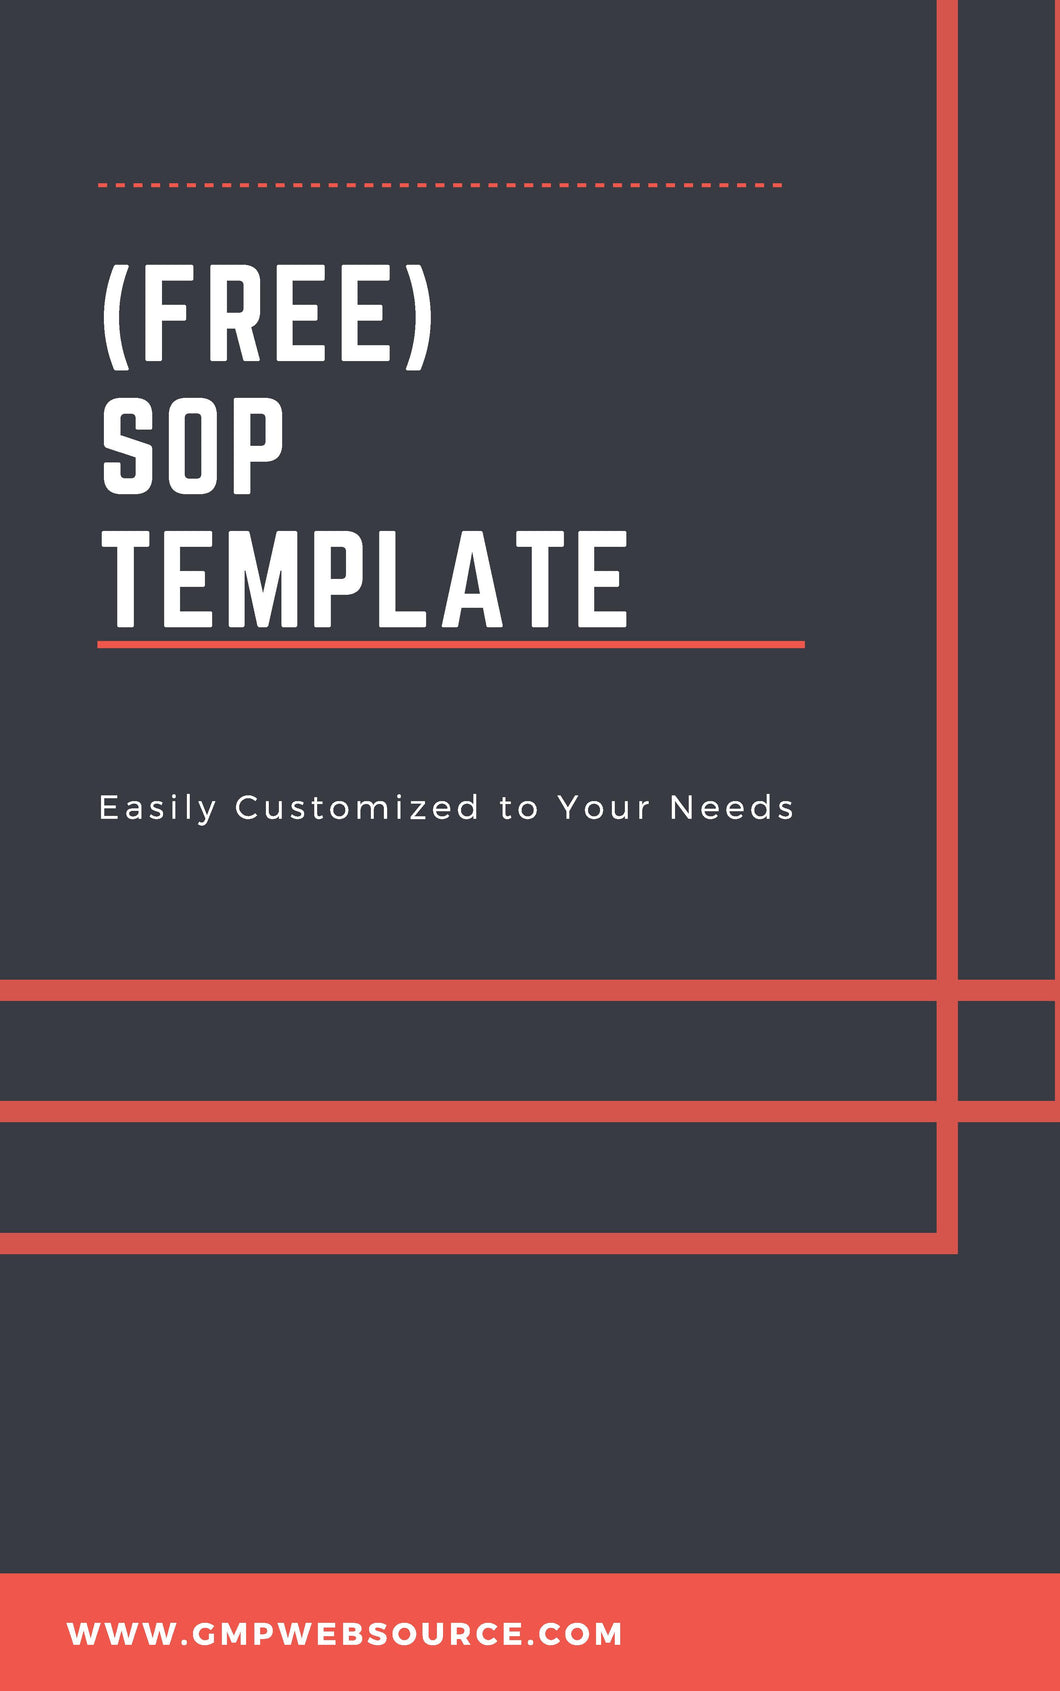 Standard Operating Procedure (SOP) Template (Free)